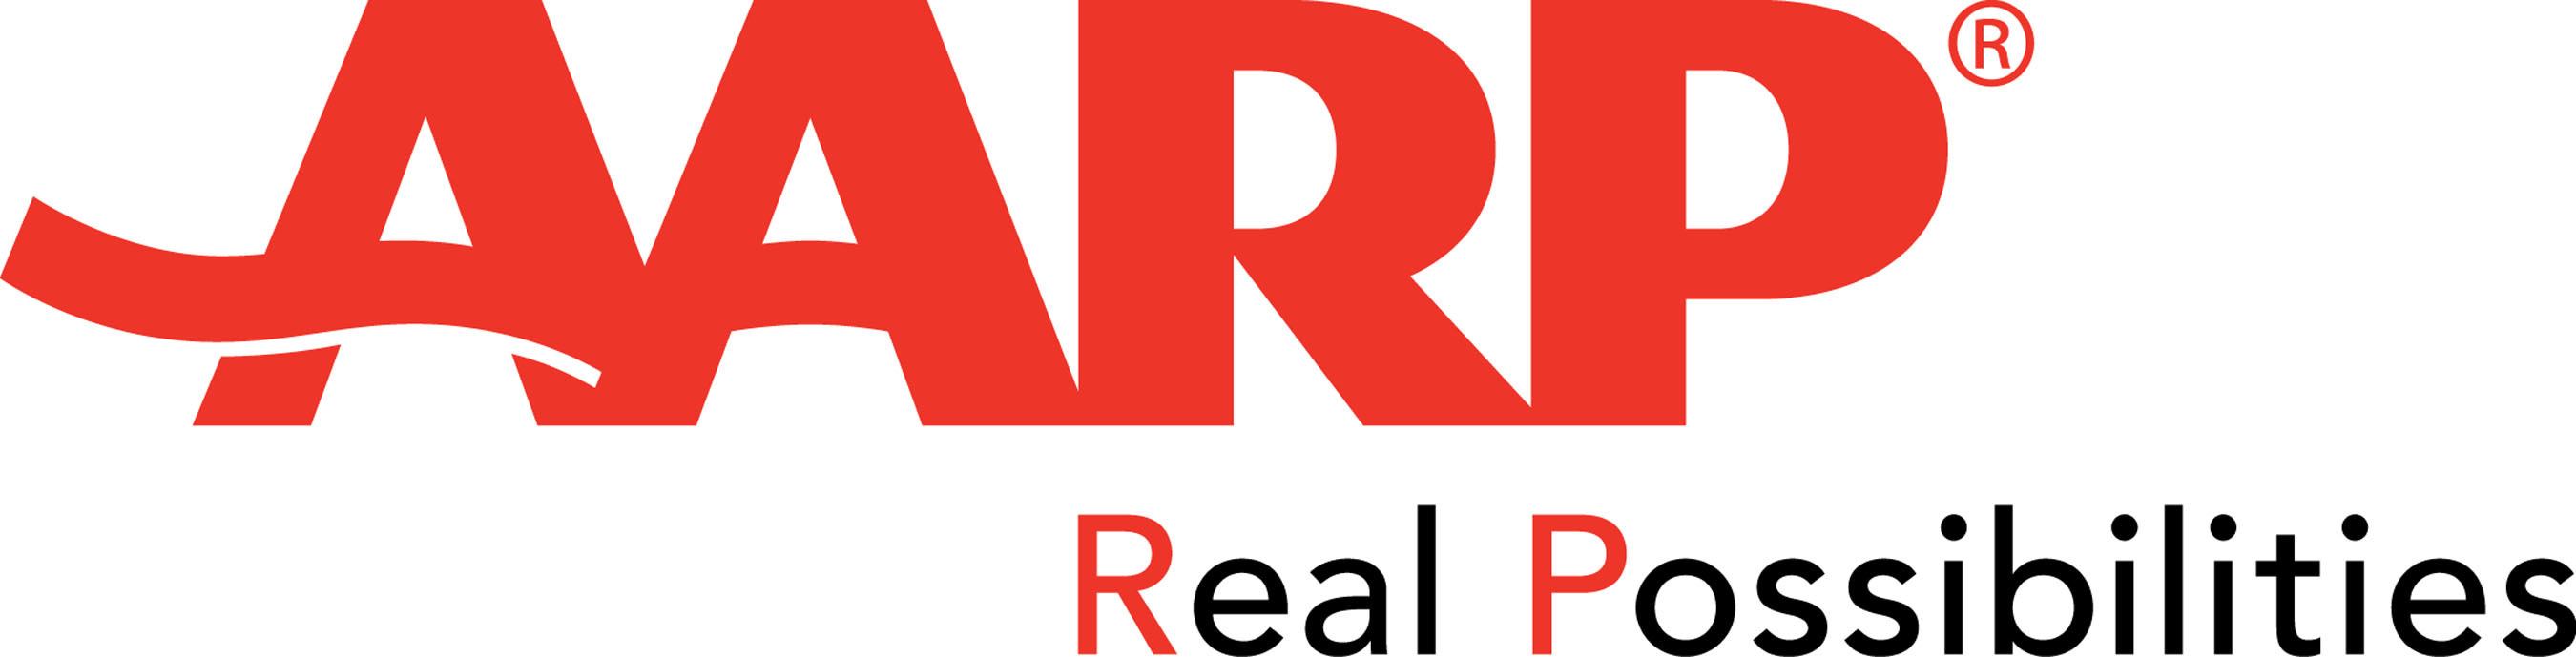 AARP national logo. (PRNewsFoto/AARP) (PRNewsFoto/)